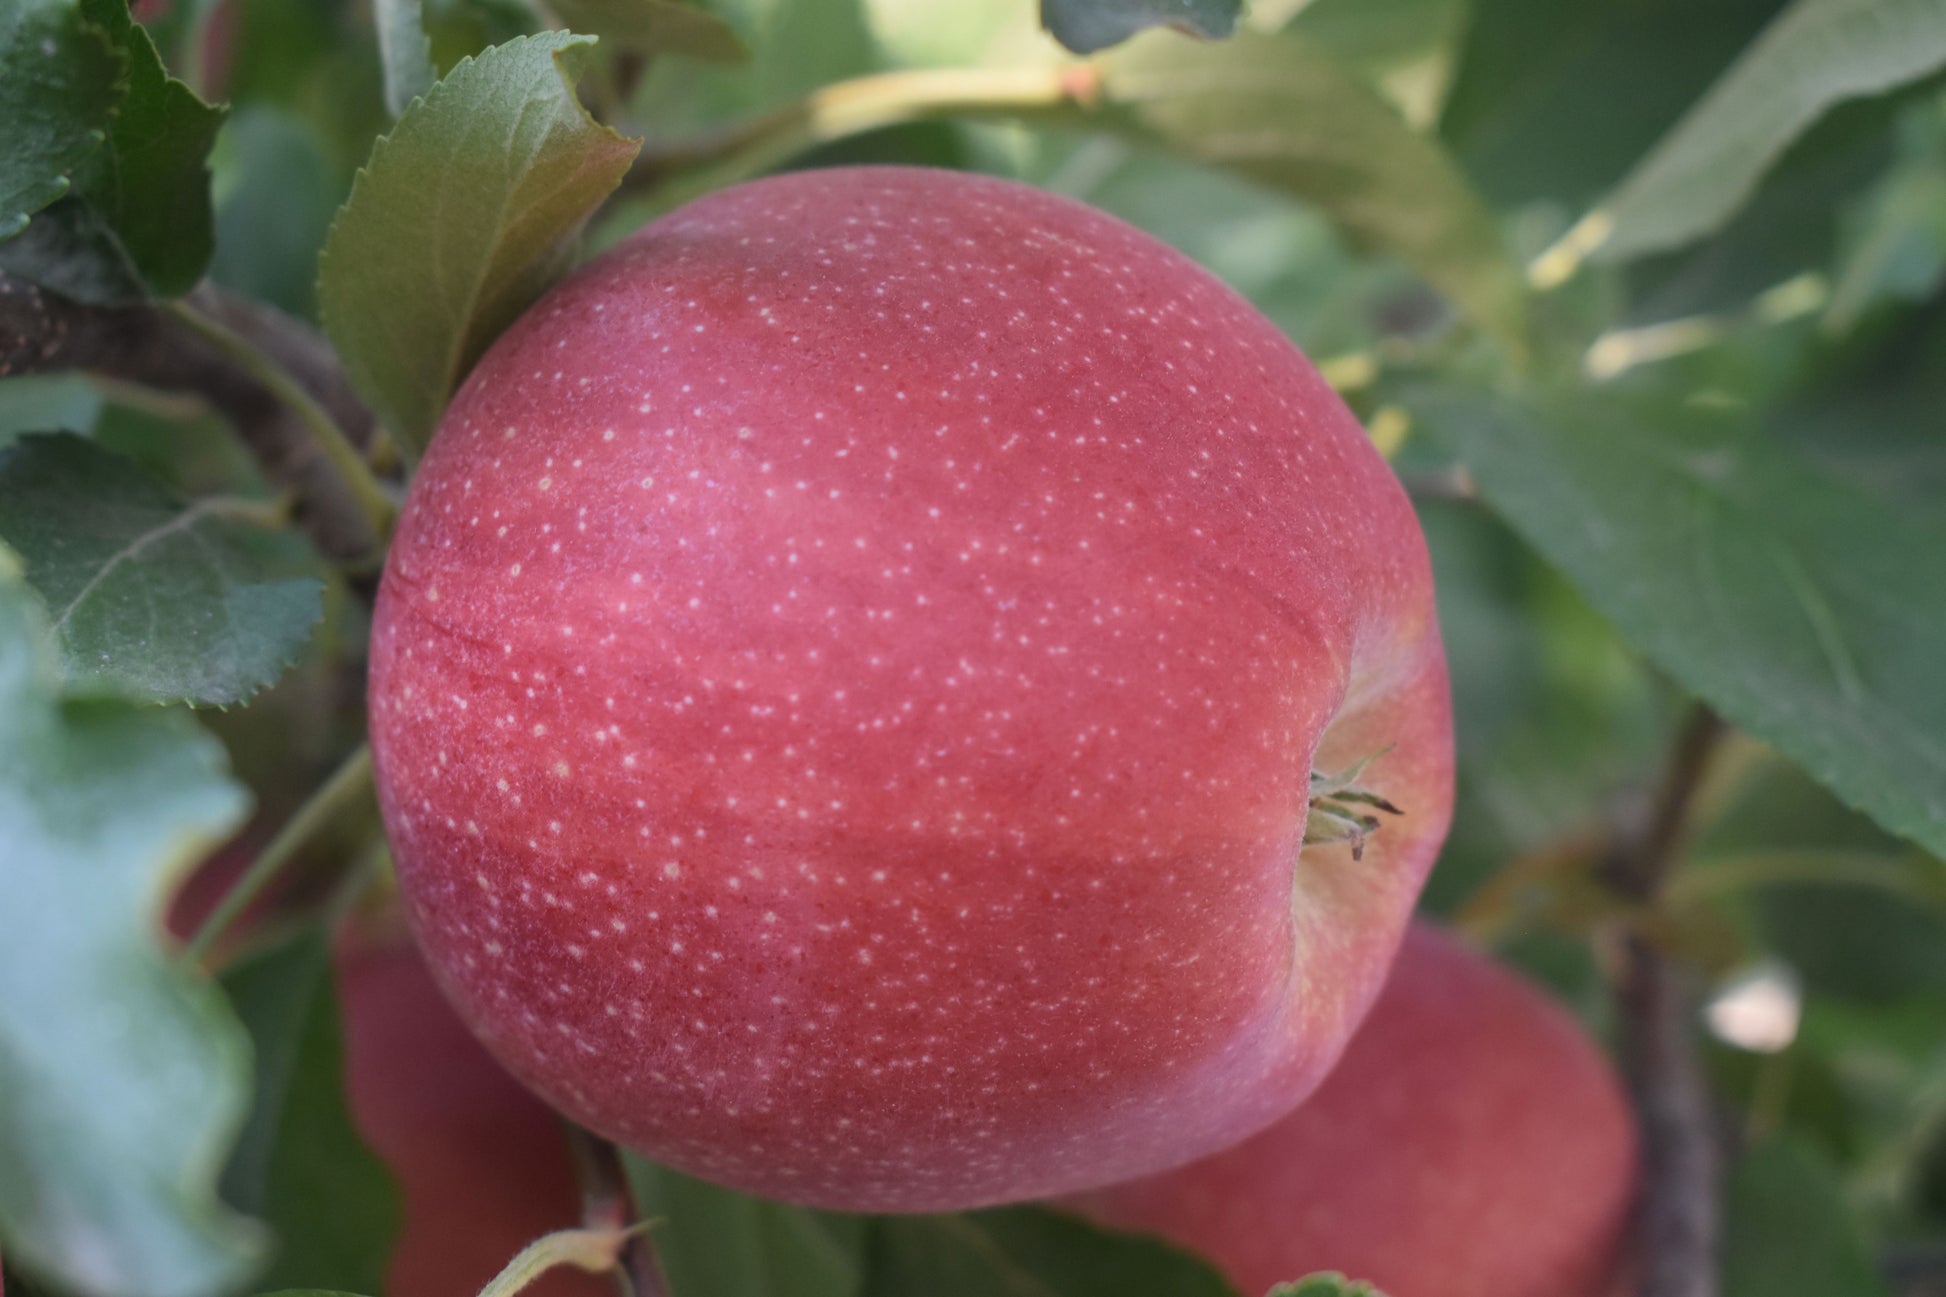 Gala Apples – KPJasper, LLC dba Kathy's Apple Farm